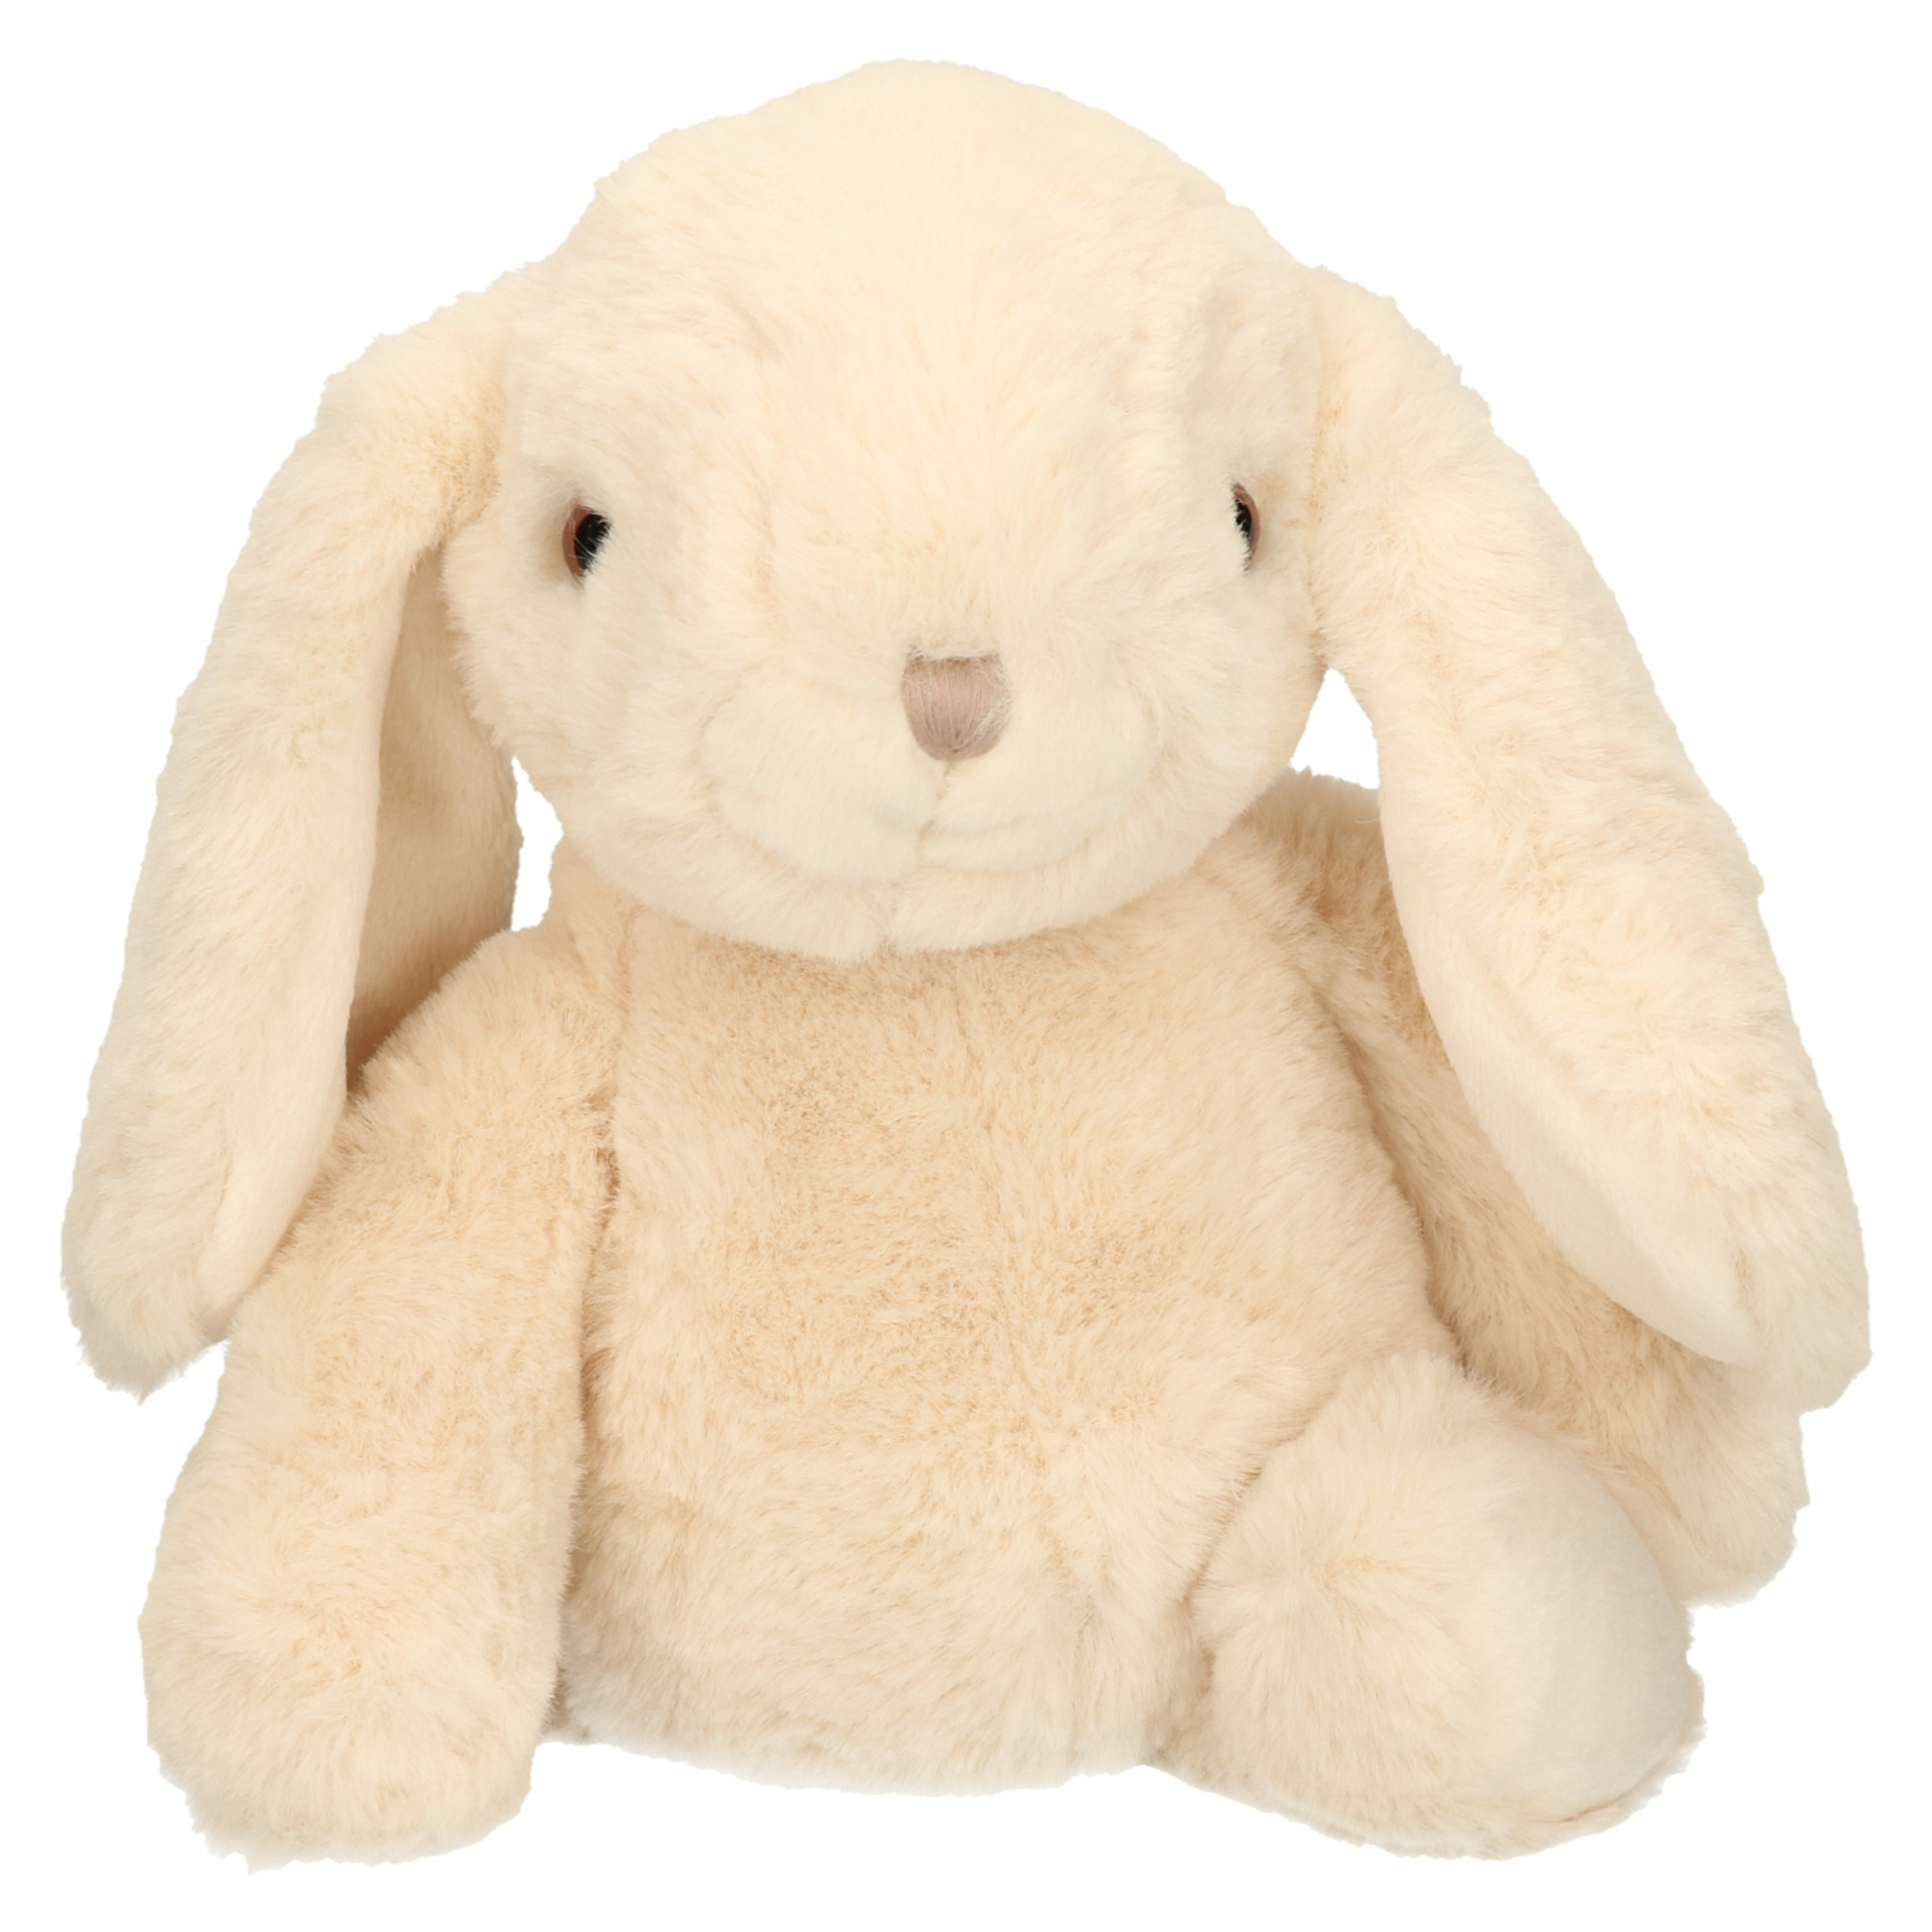 Bukowski pluche konijn knuffeldier - creme wit - staand - 25 cm - luxe knuffels -